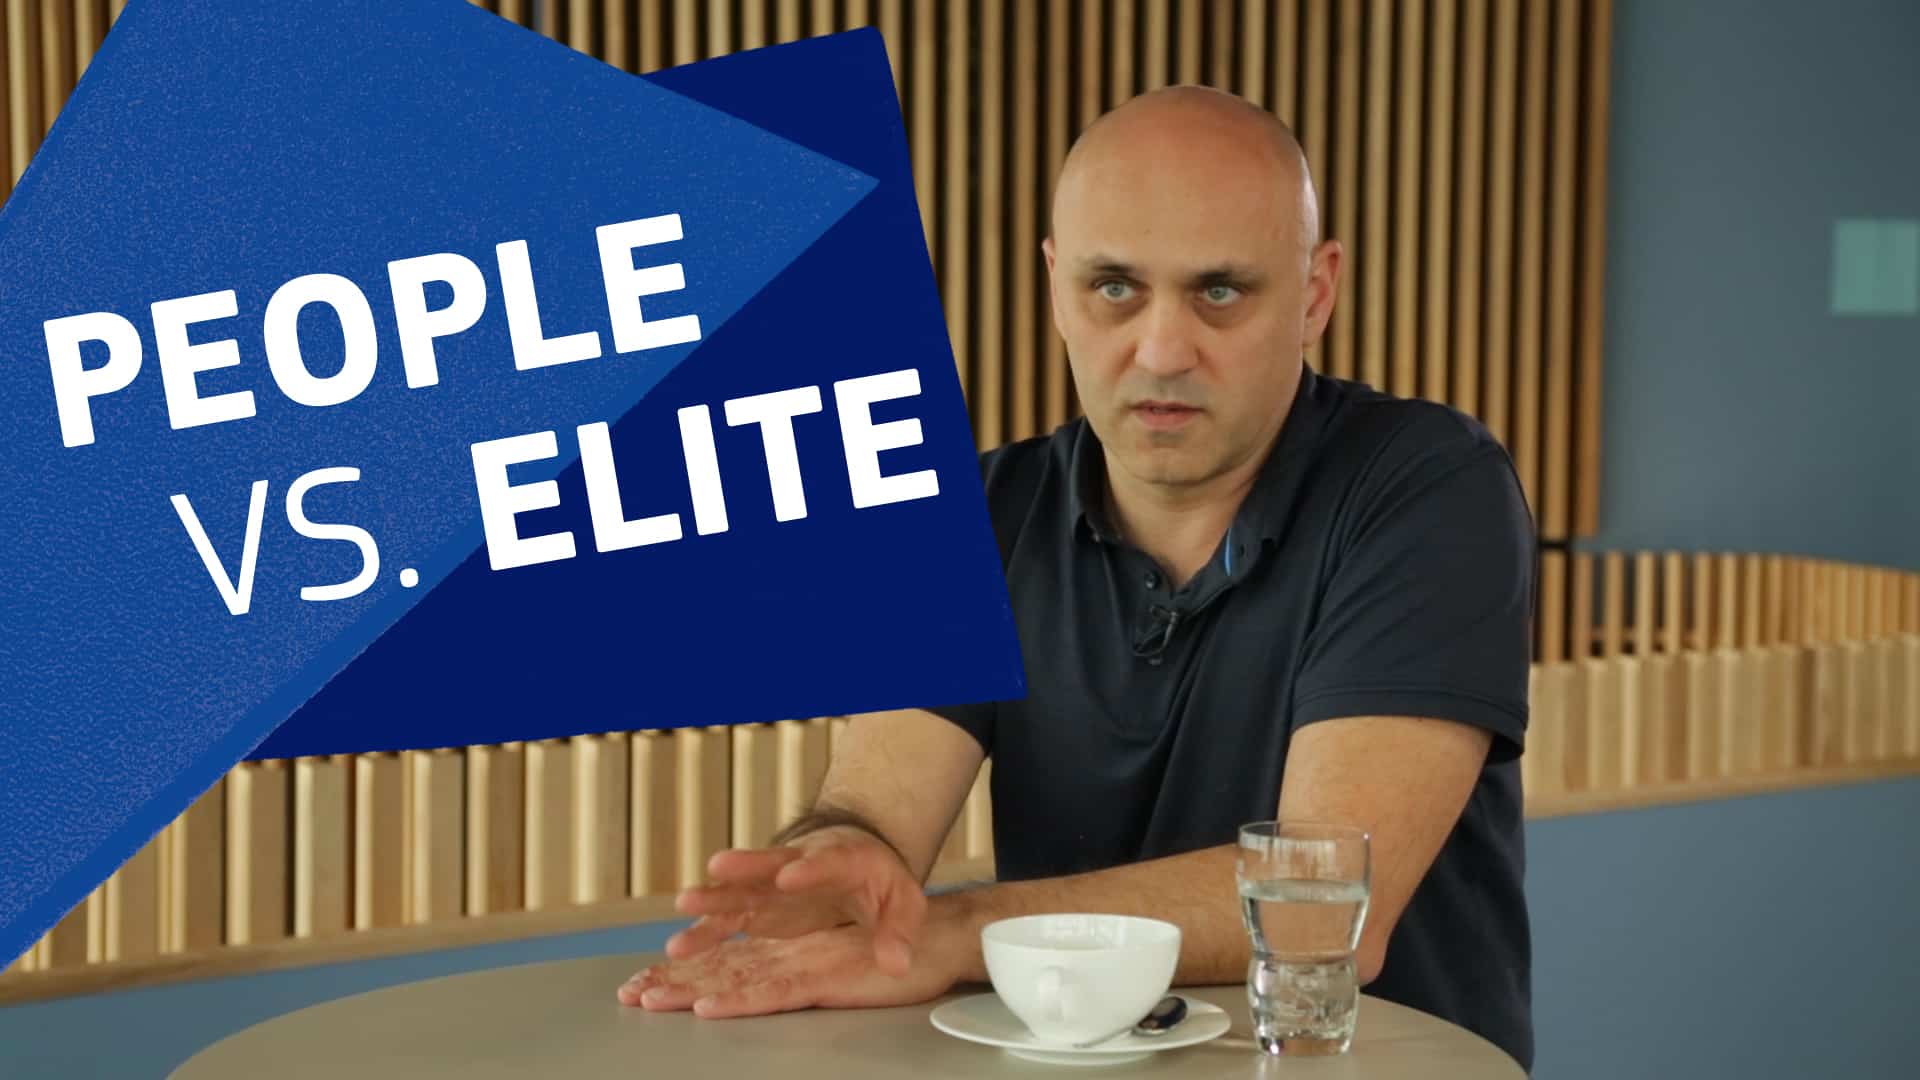 Ertuğ Tombuş with text overlay 'People vs. Elite'